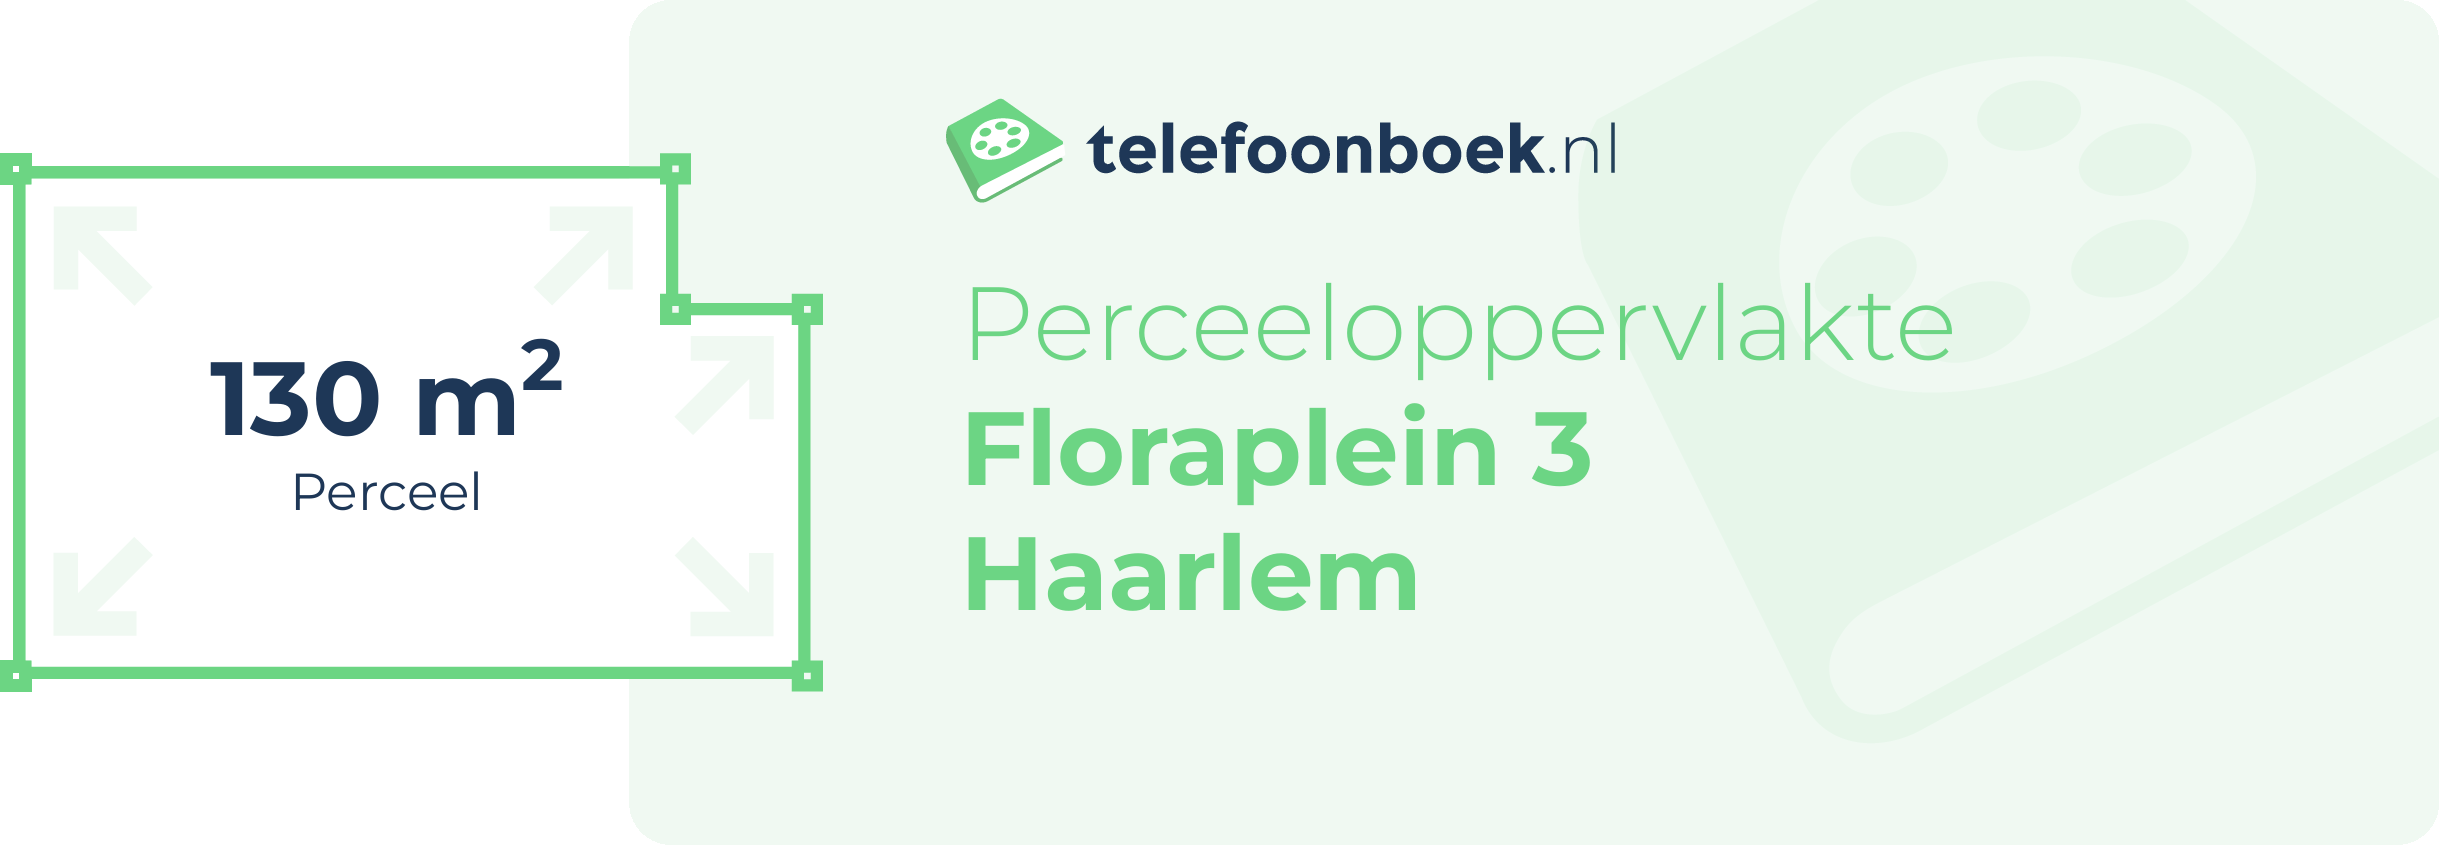 Perceeloppervlakte Floraplein 3 Haarlem